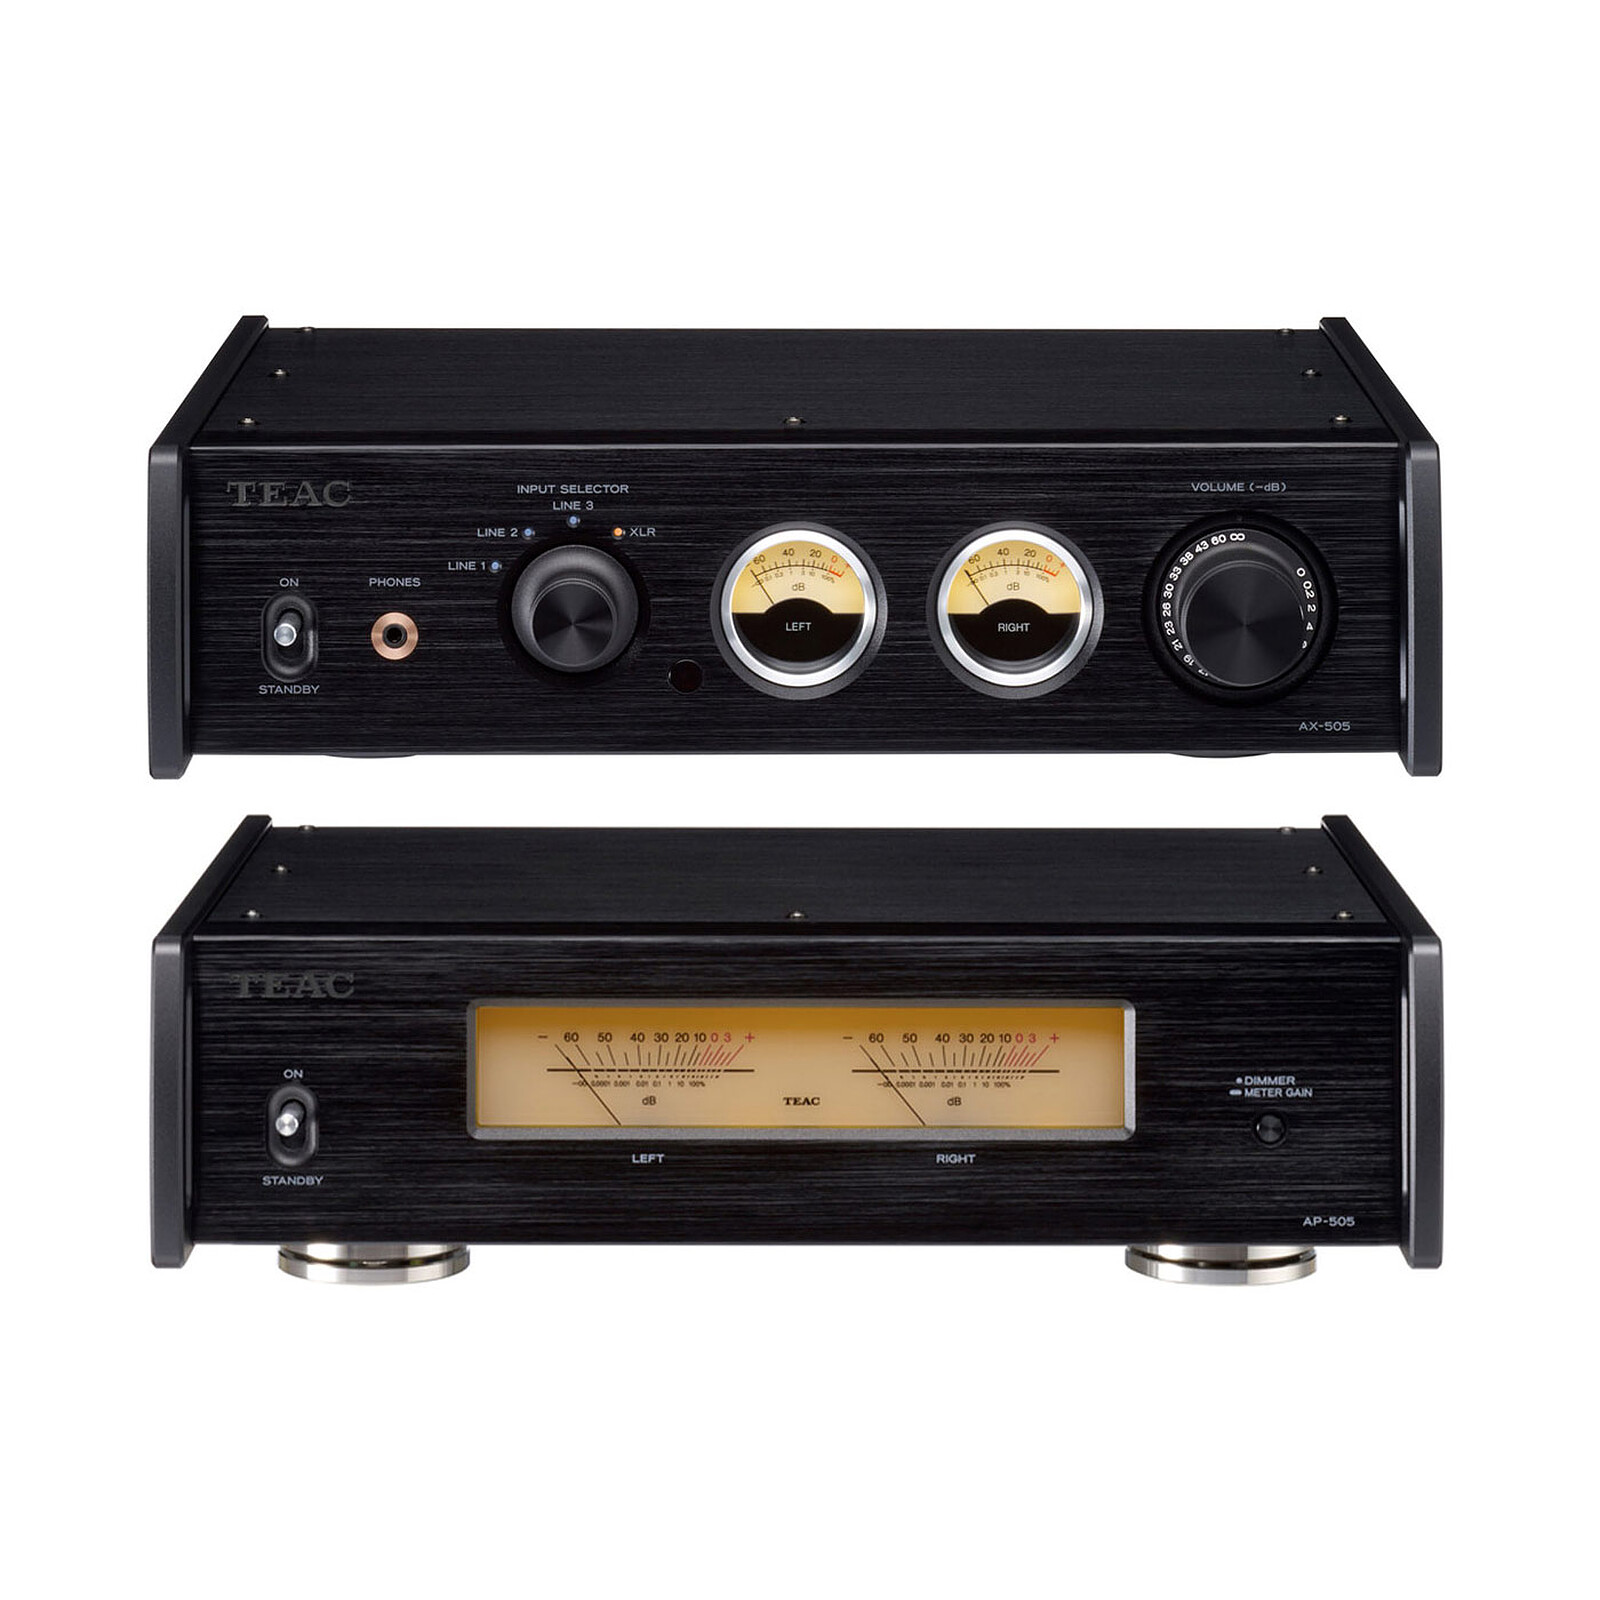 Teac AX-505 Black + AP-505 Black - Home audio system - LDLC 3-year warranty  | Holy Moley